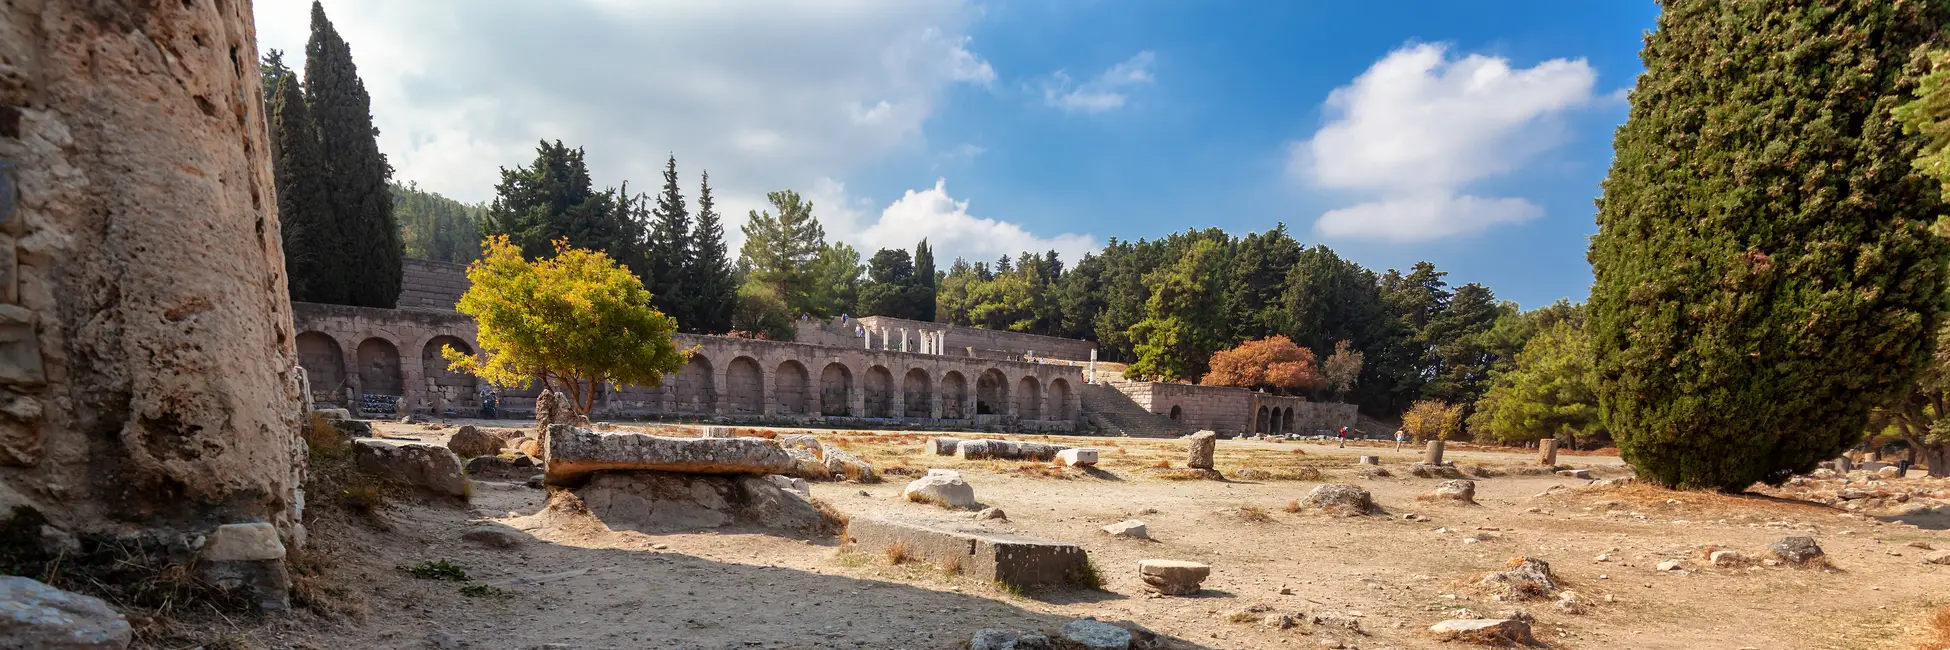 La ruine du Temple Asclépios de Kos  